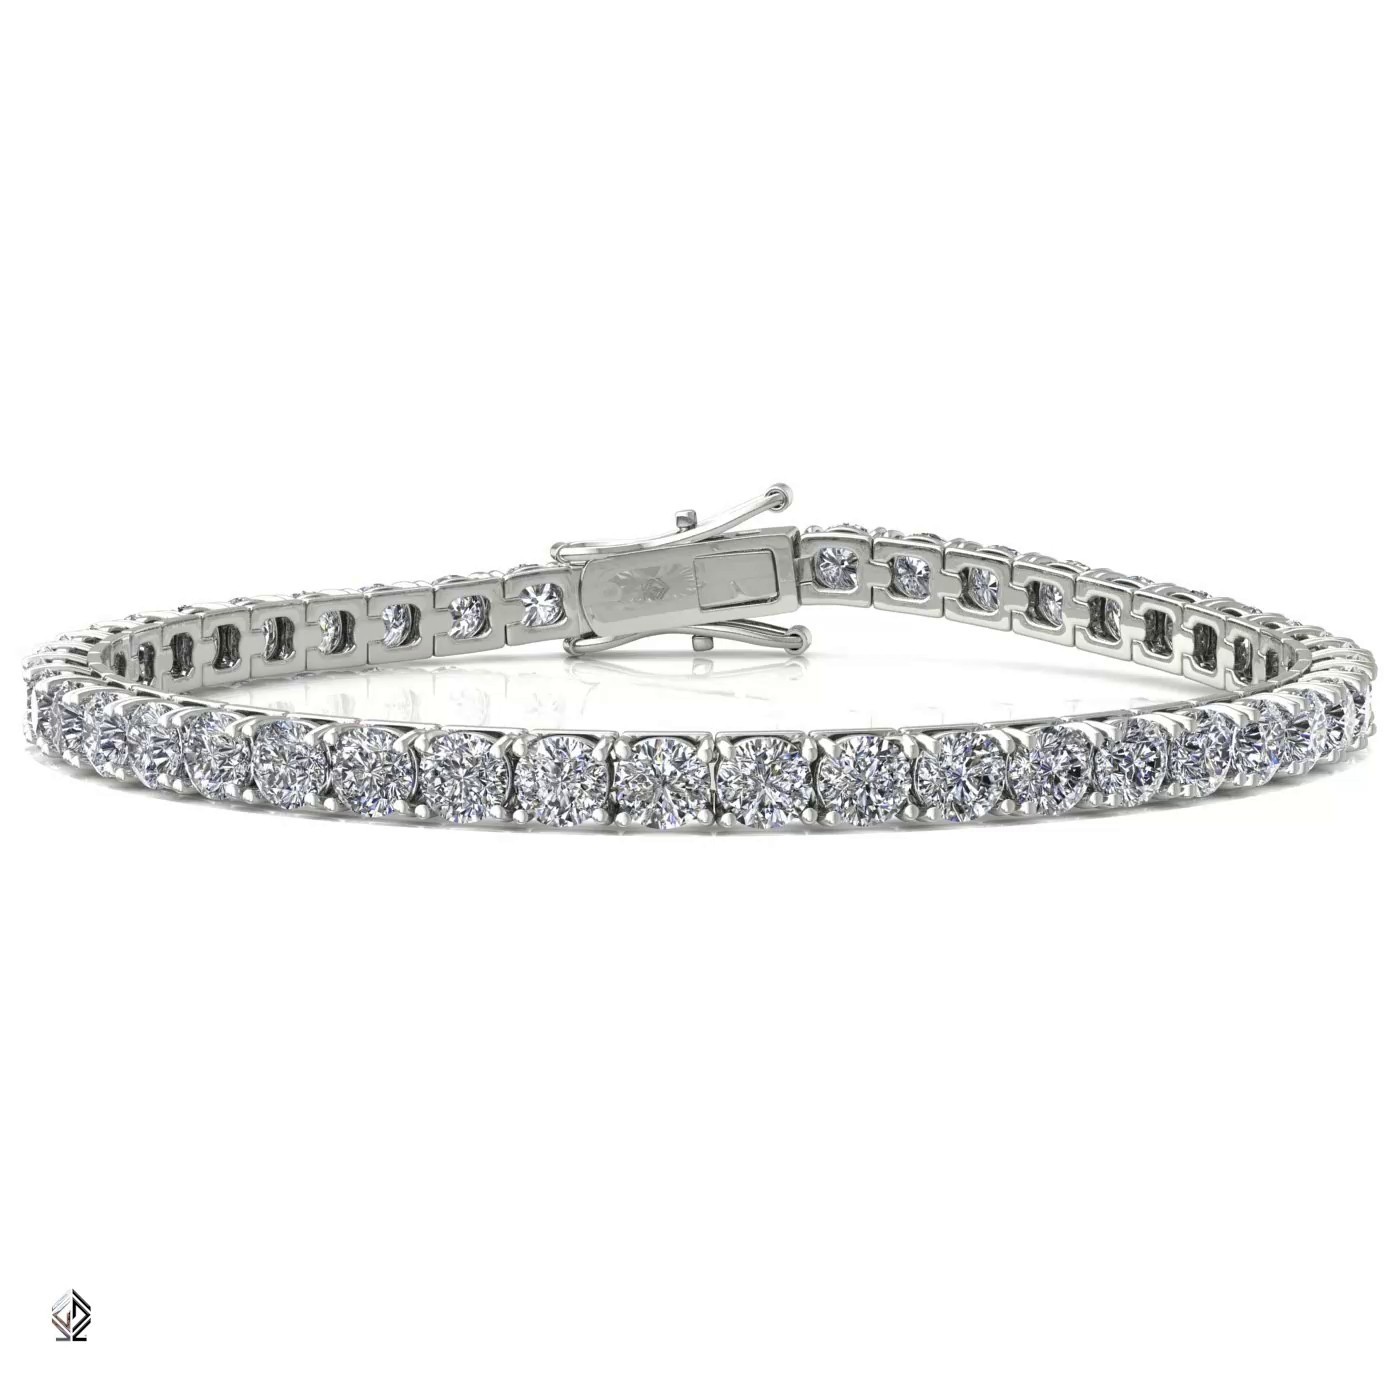 18k white gold 3.3mm 4 prong round shape diamond tennis bracelet in square setting Photos & images